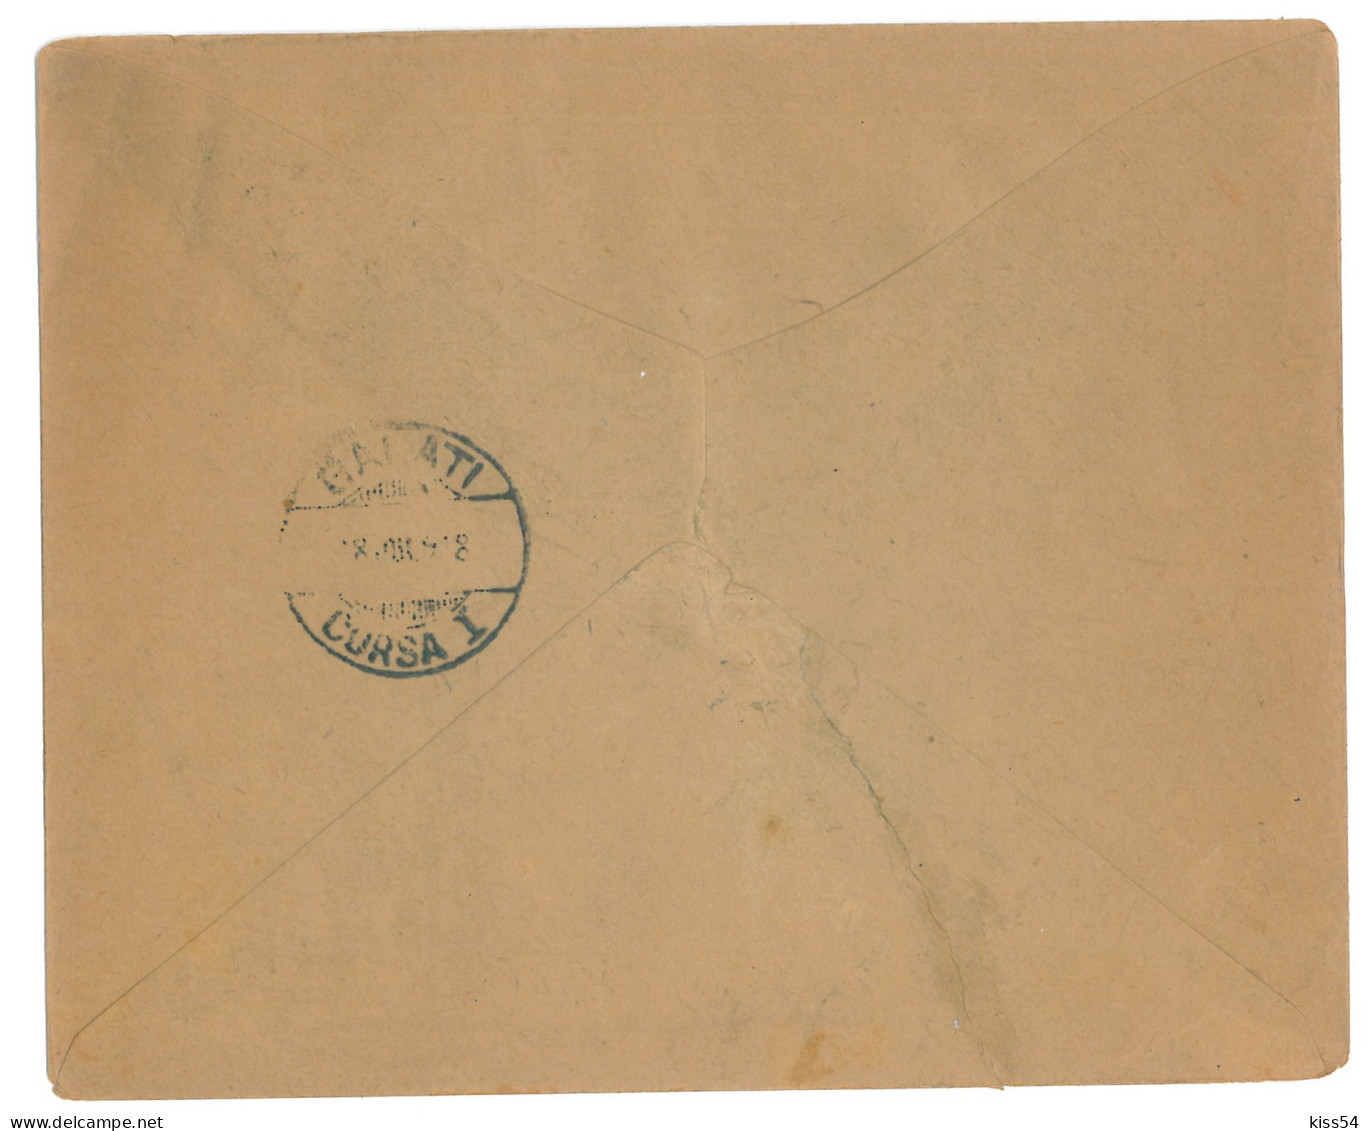 CIP 22 - 242-a GALATI - REGISTERED - Cover - Used - 1918 - Storia Postale